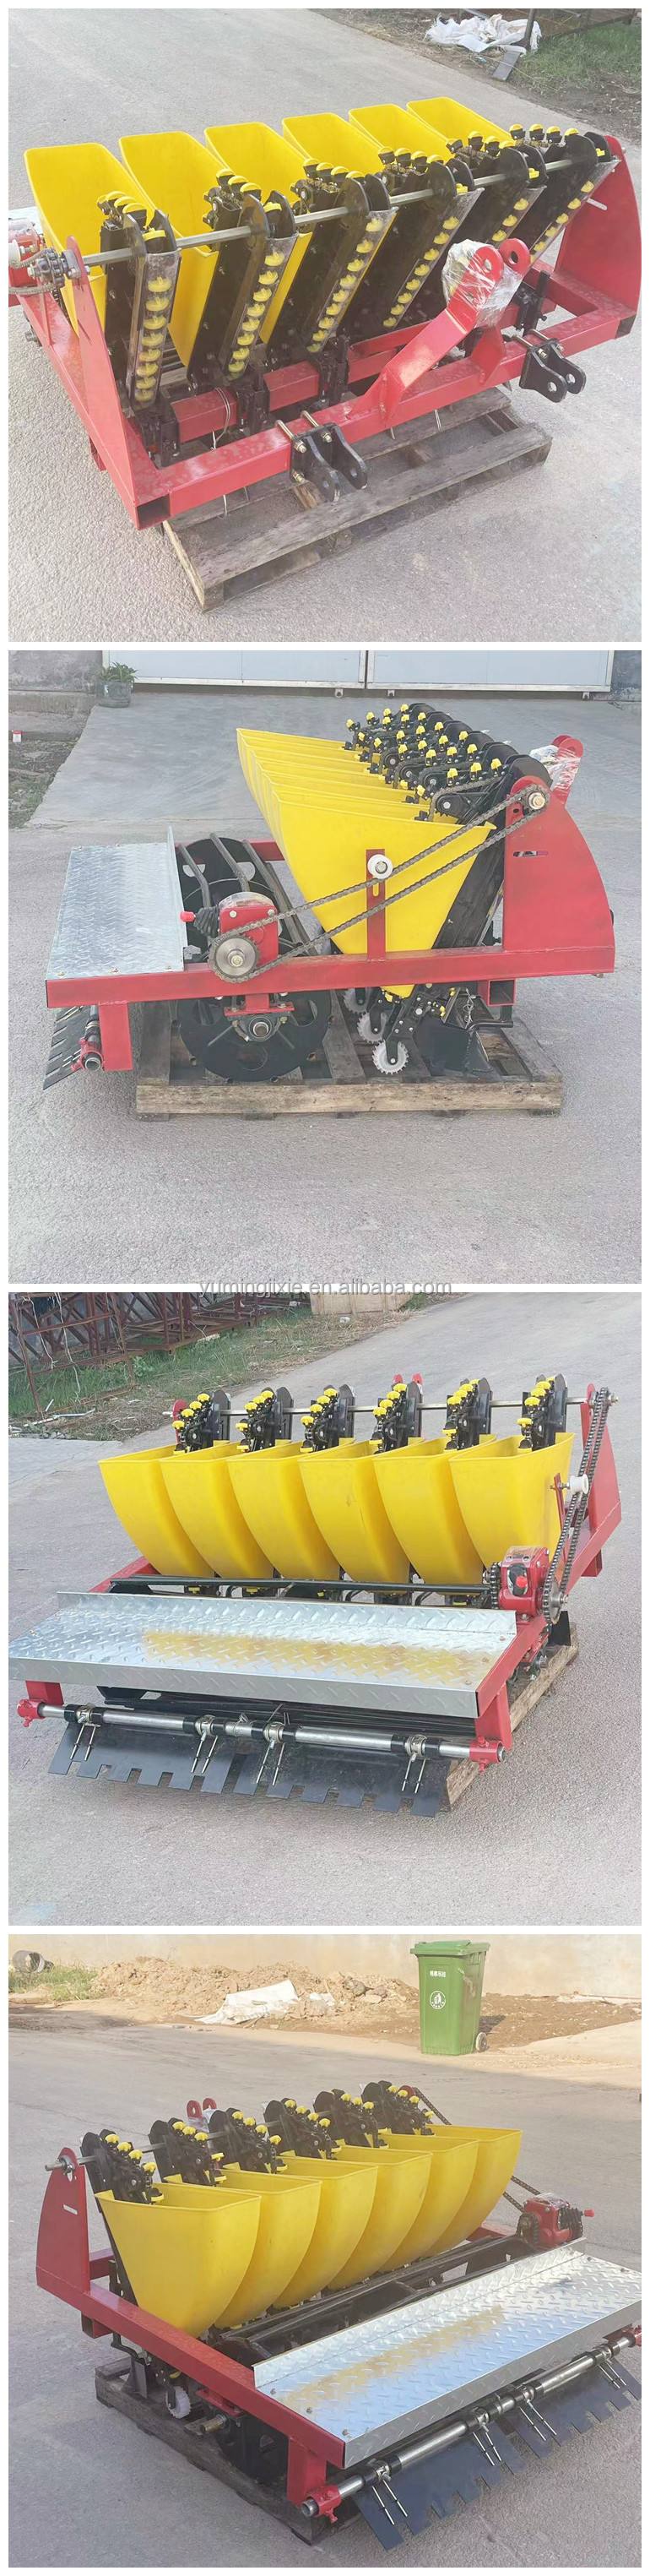 9 Rows Tractor  mounted  garlic planter /domestic garlic seeder  / garlic planter